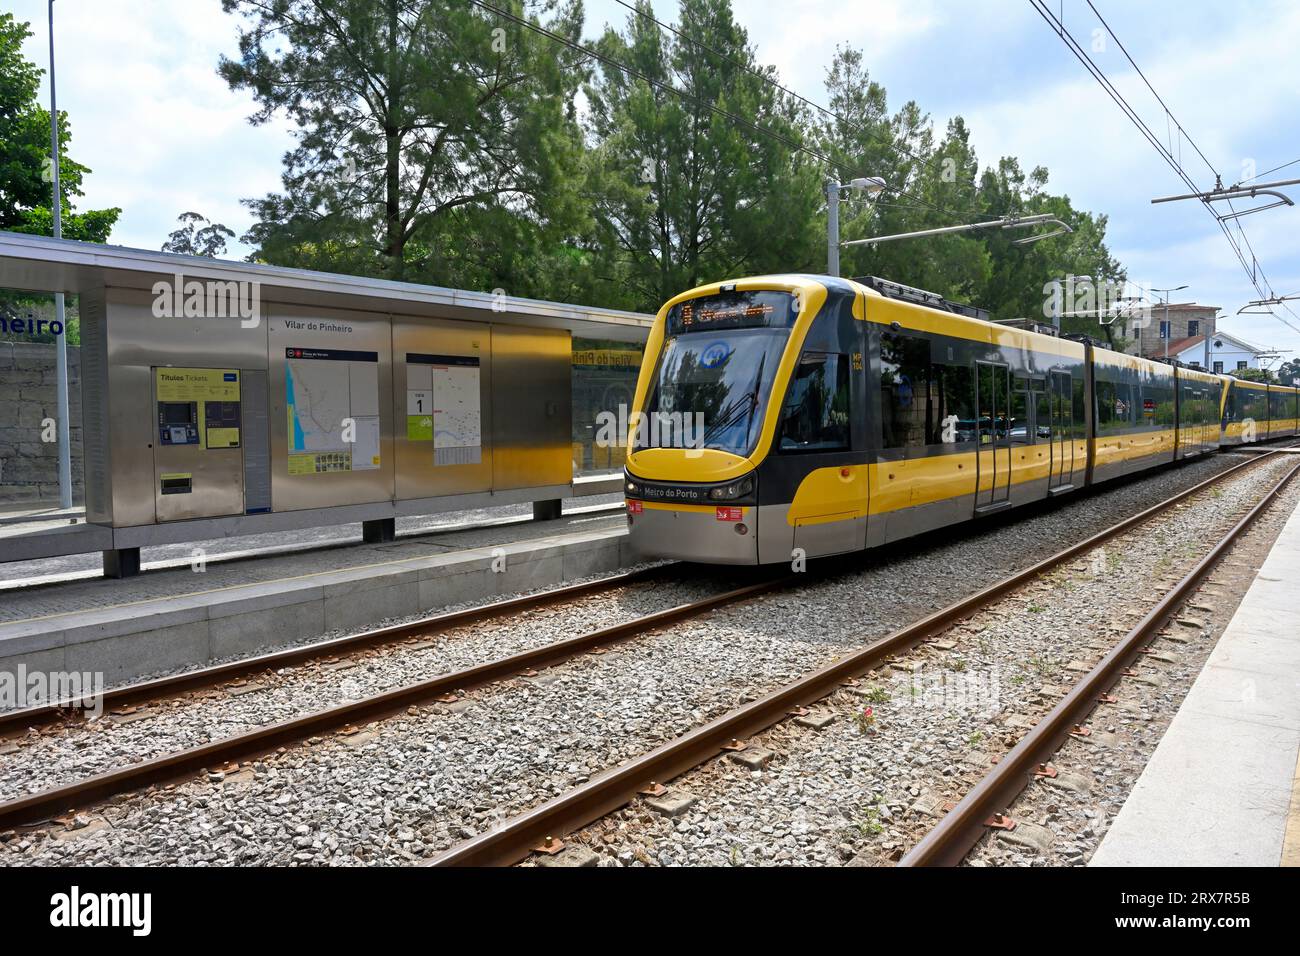 Train arrivant à la station de métro de banlieue, Vilar Pinheiro, banlieue de Porto, Portugal Banque D'Images